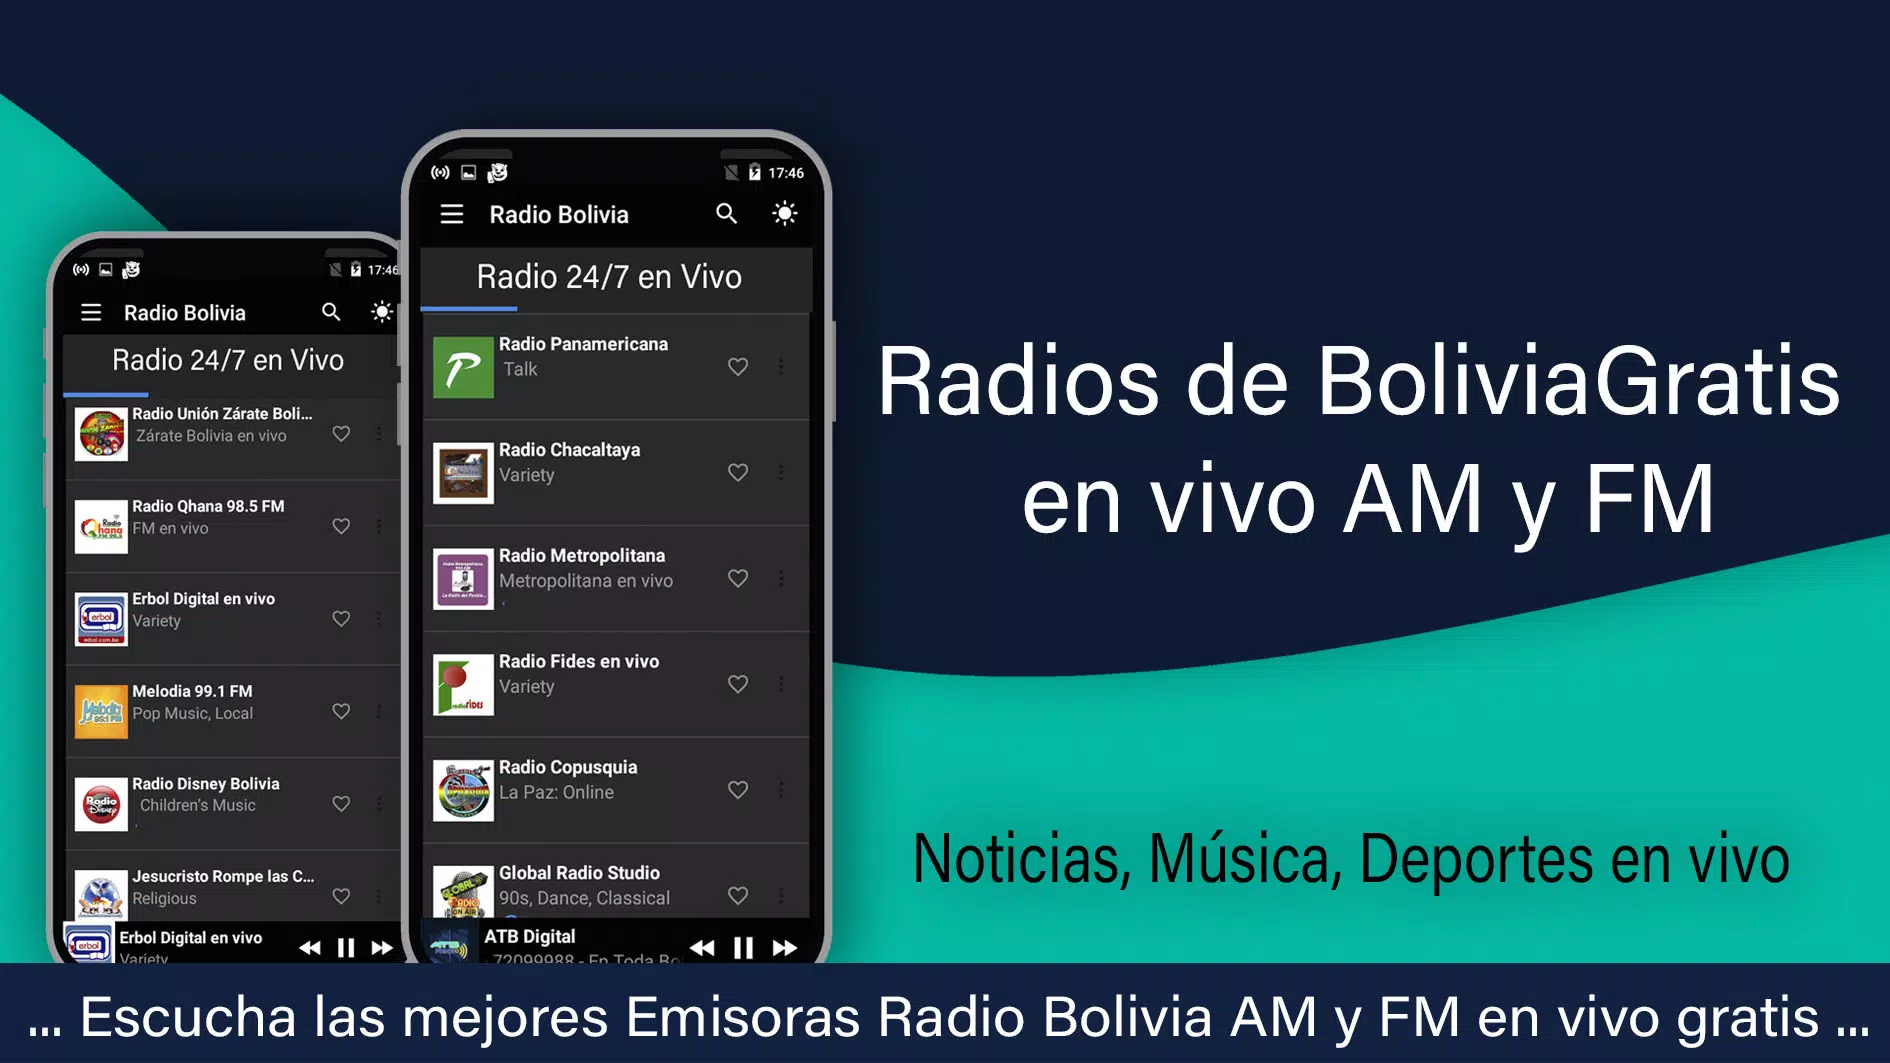 Radio Bolivia Gratis: Radio AM FM for Android - APK Download